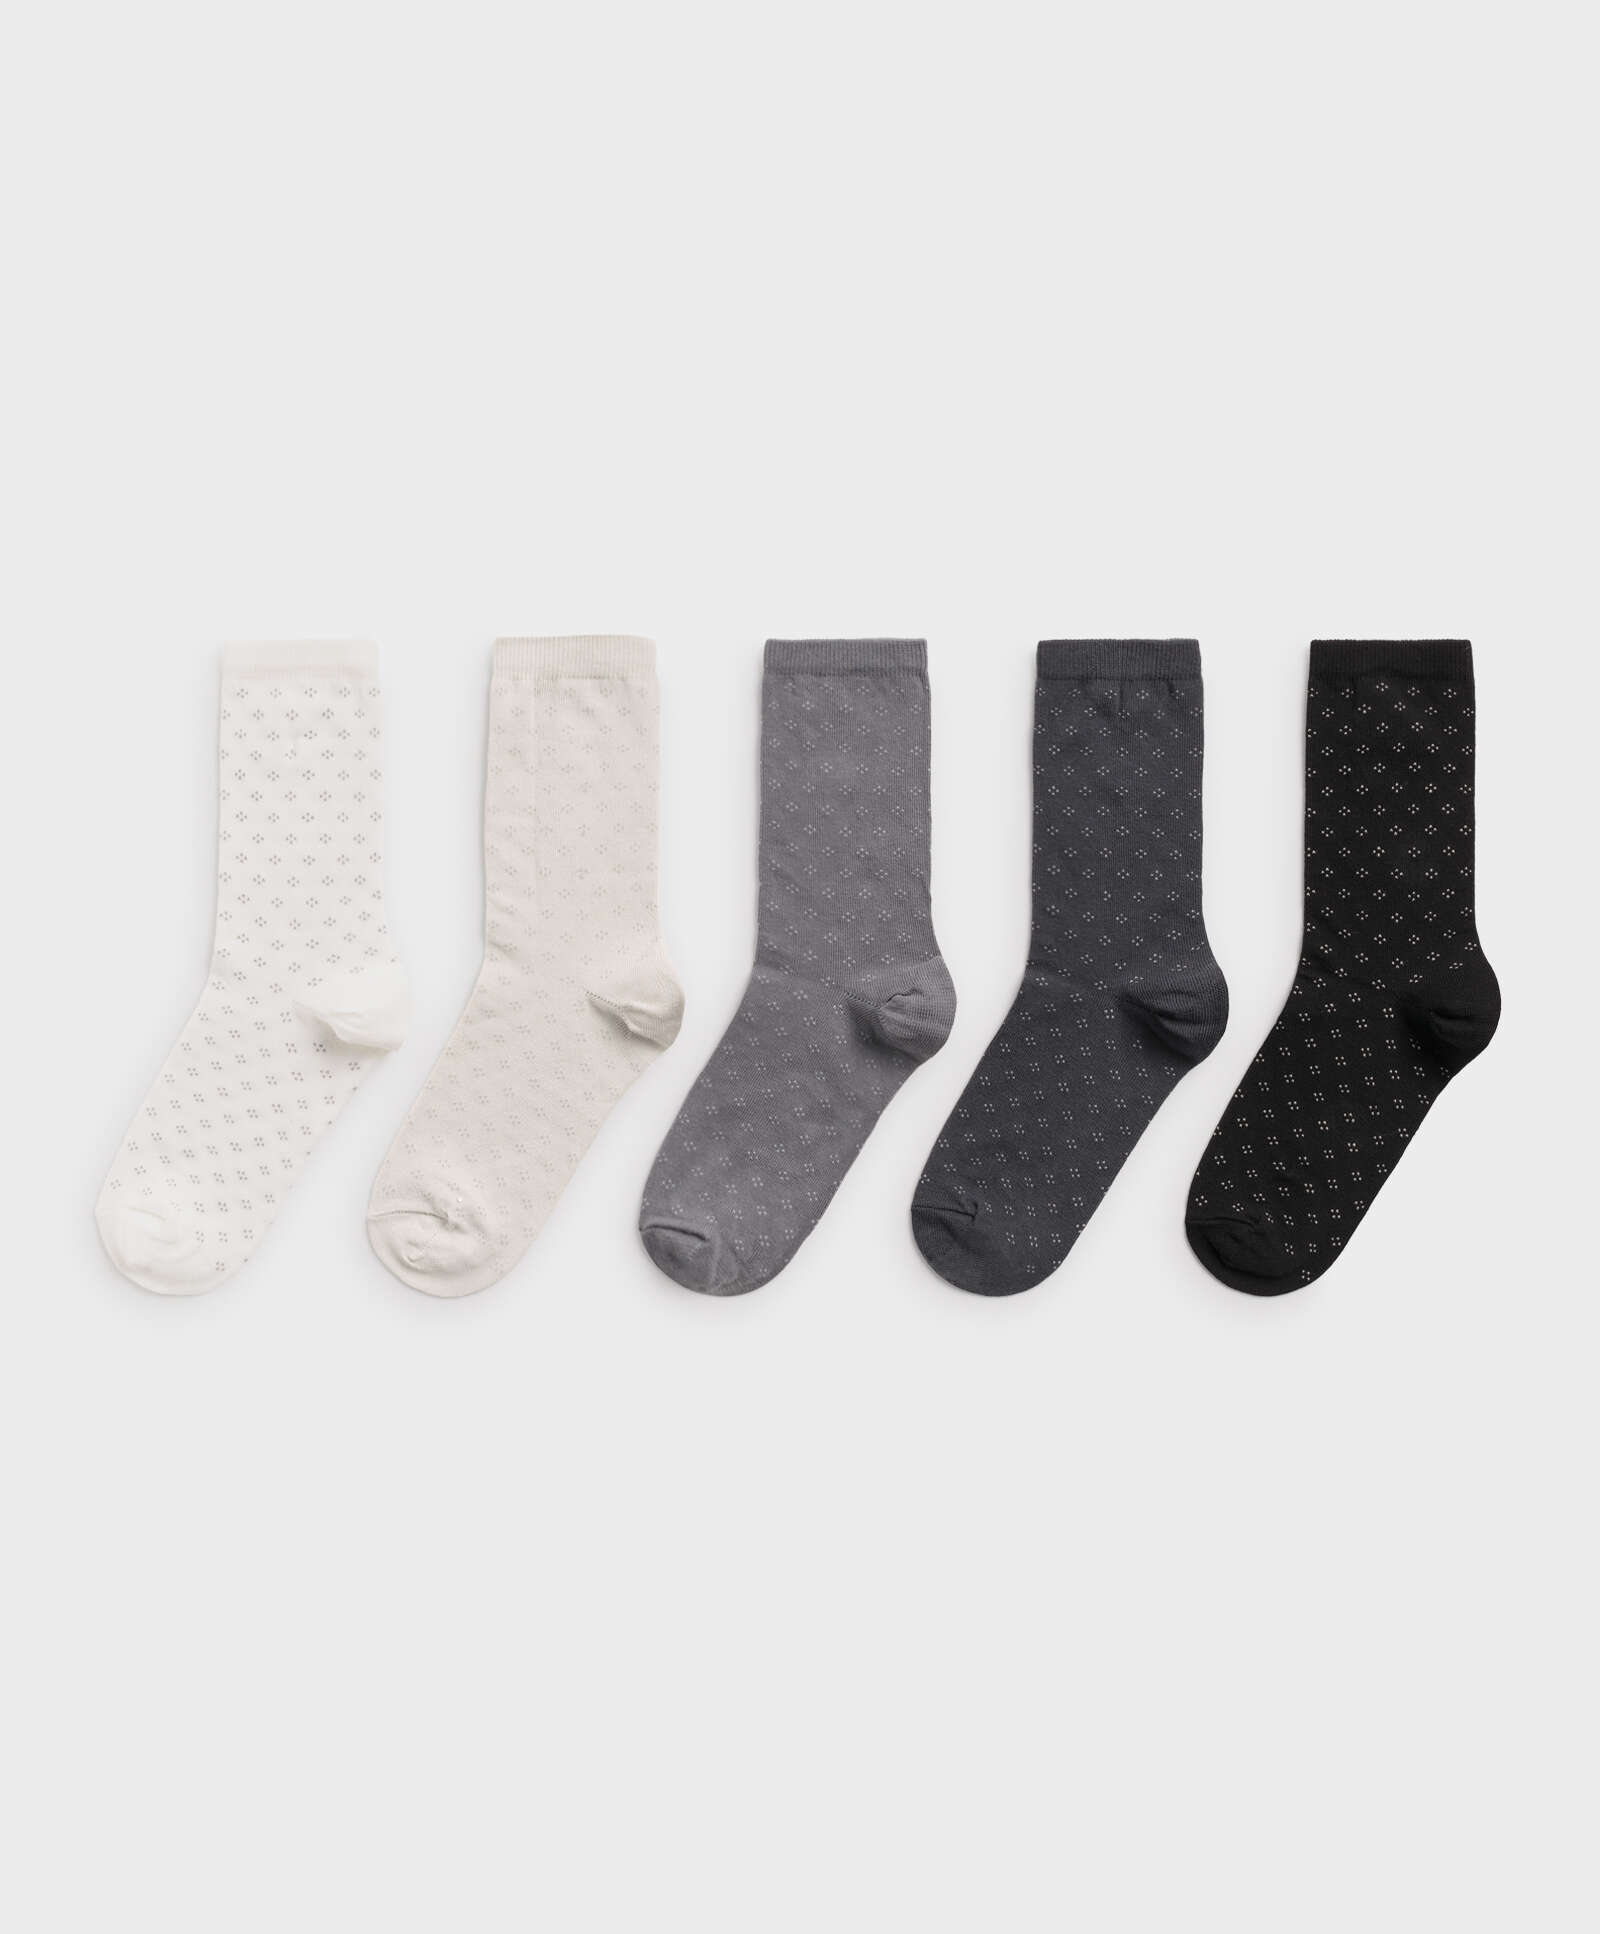 5 pairs of cotton fantasy socks